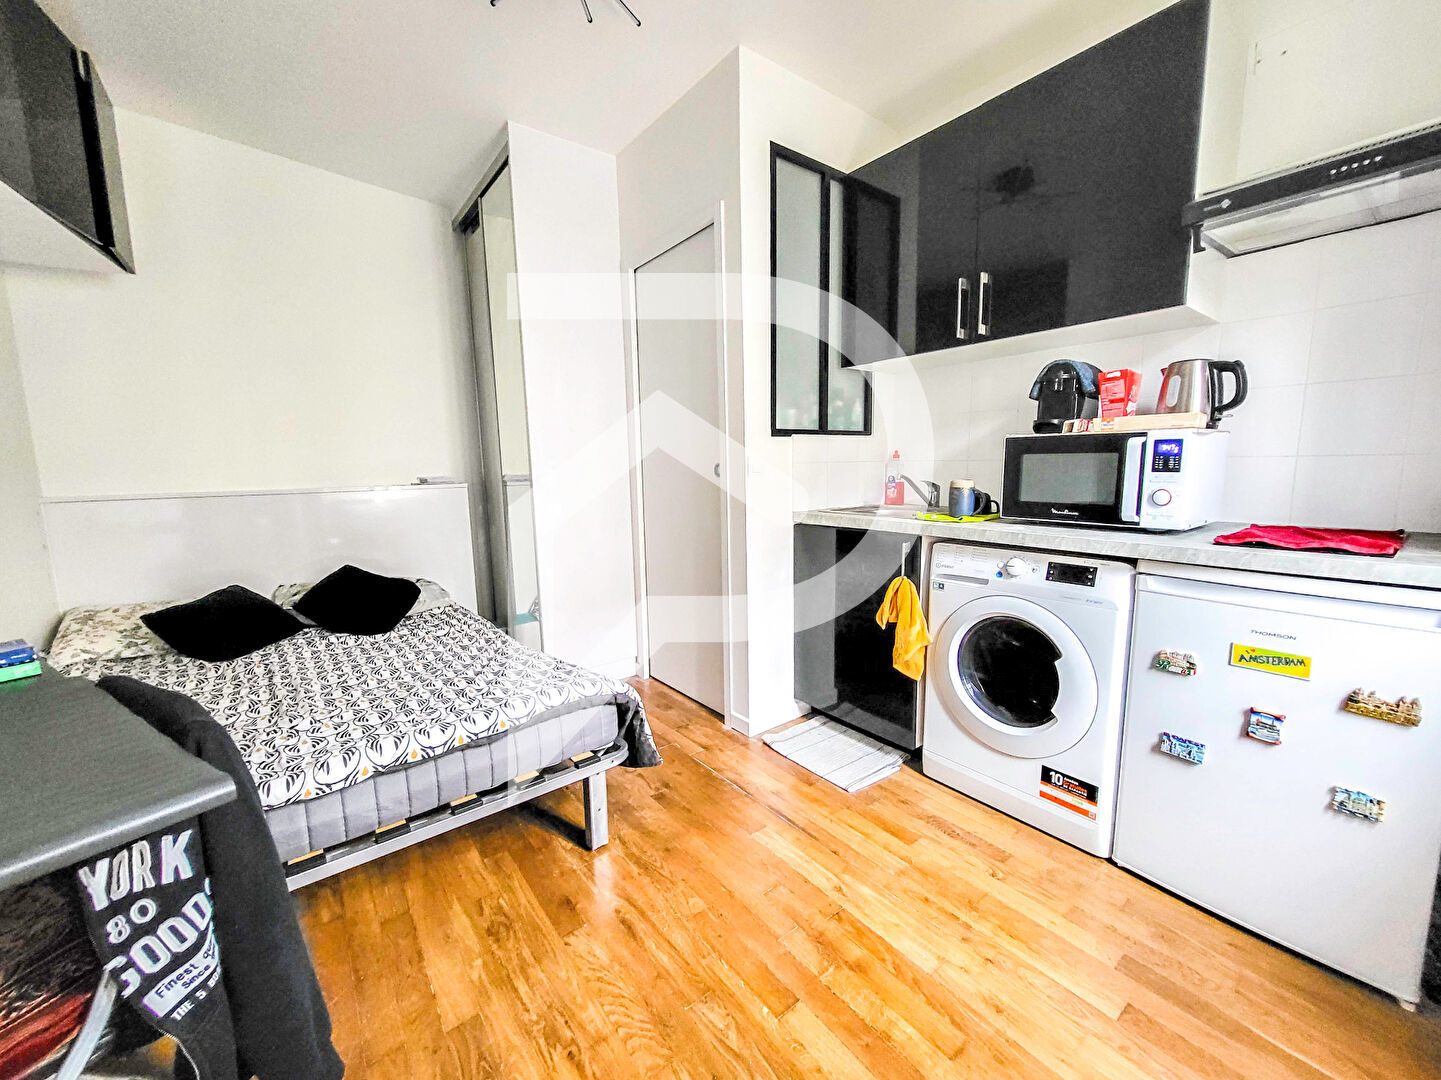 Appartement a louer ville-d'avray - 1 pièce(s) - 13 m2 - Surfyn